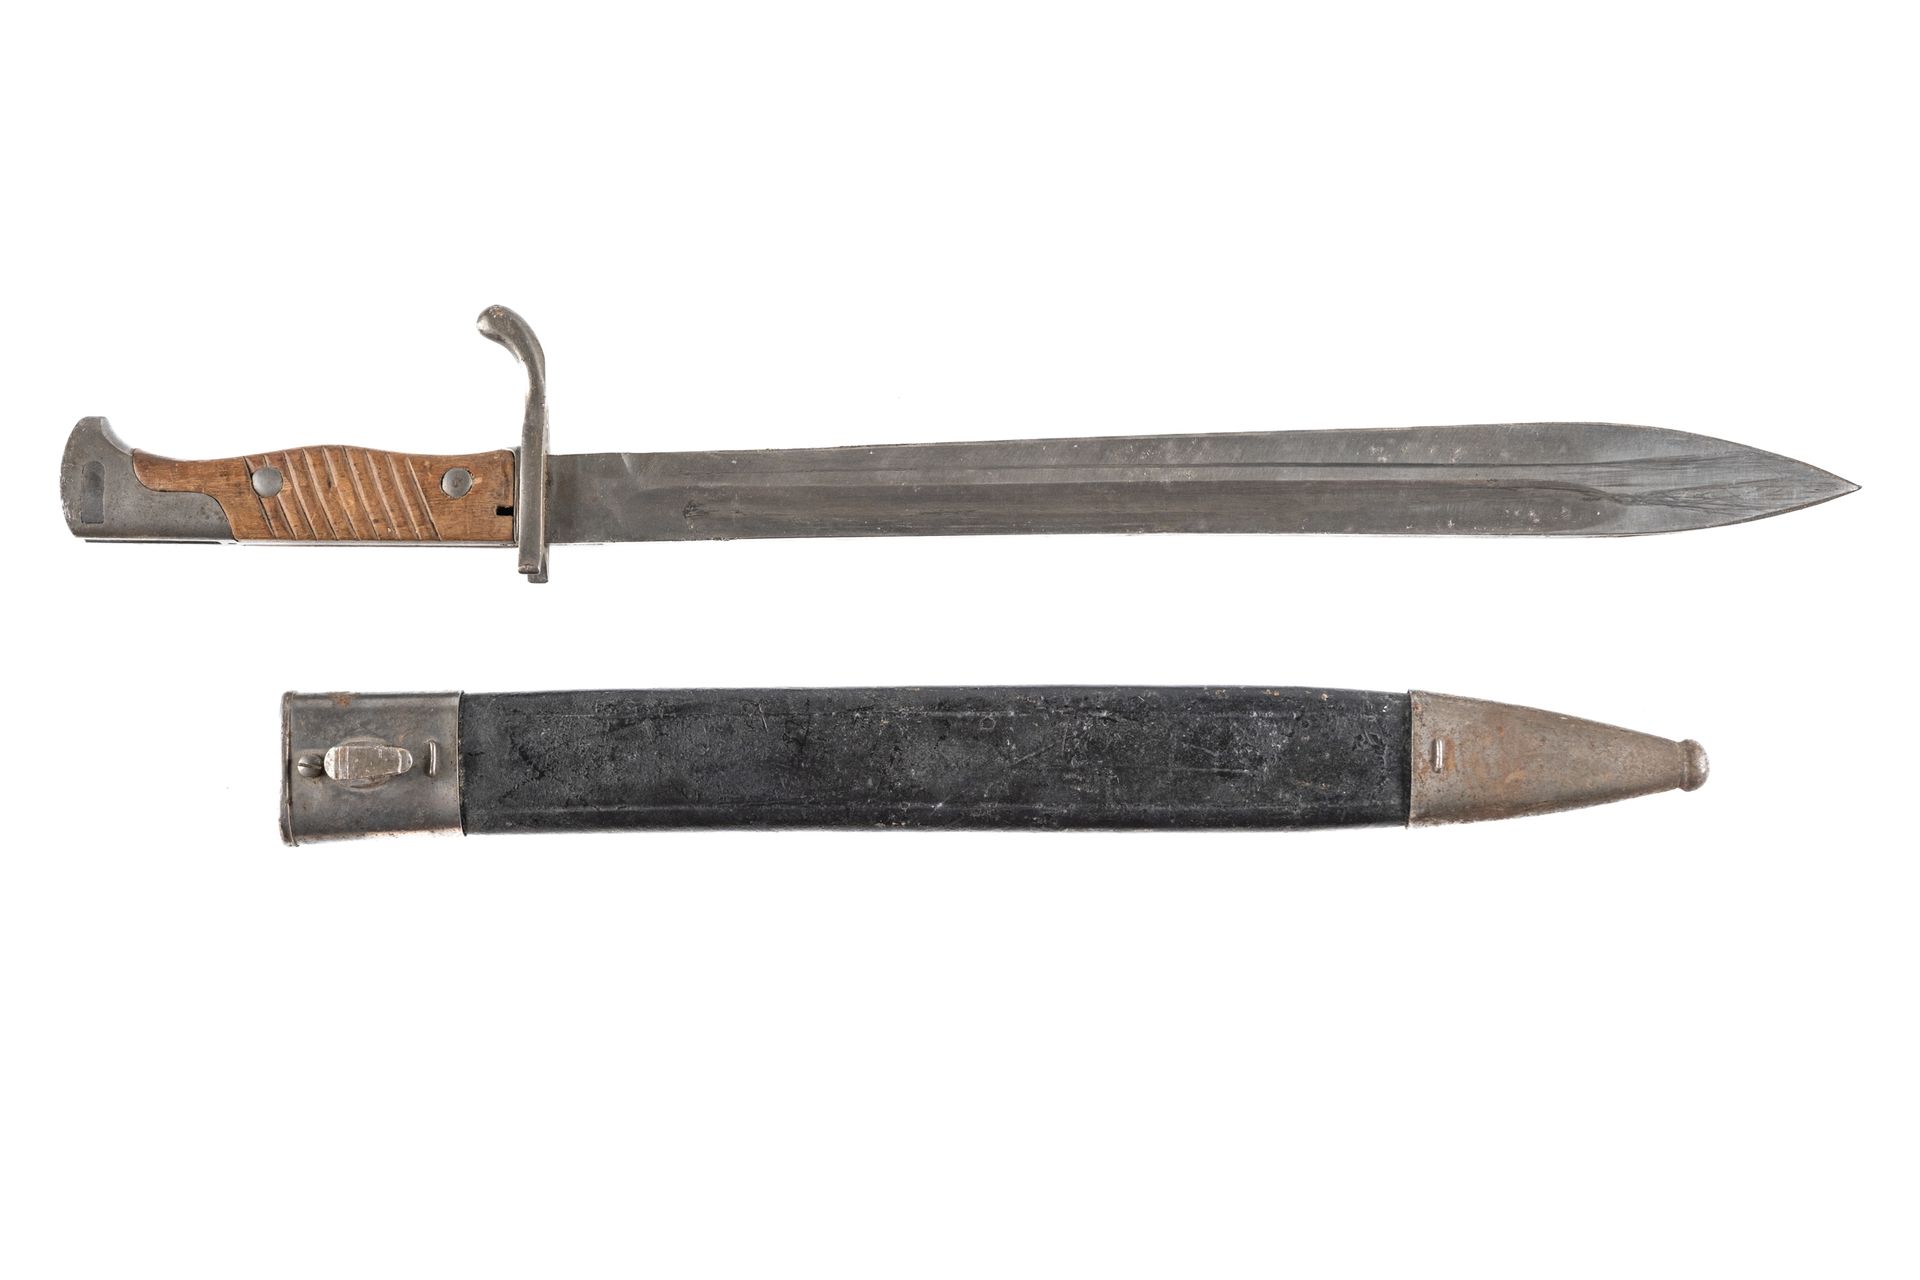 Null 德国98-05型刺刀。

1915年的埃尔福特刀片。

皮制刀鞘，有两个铁制配件。

长度：50.2厘米。

A.B.E.